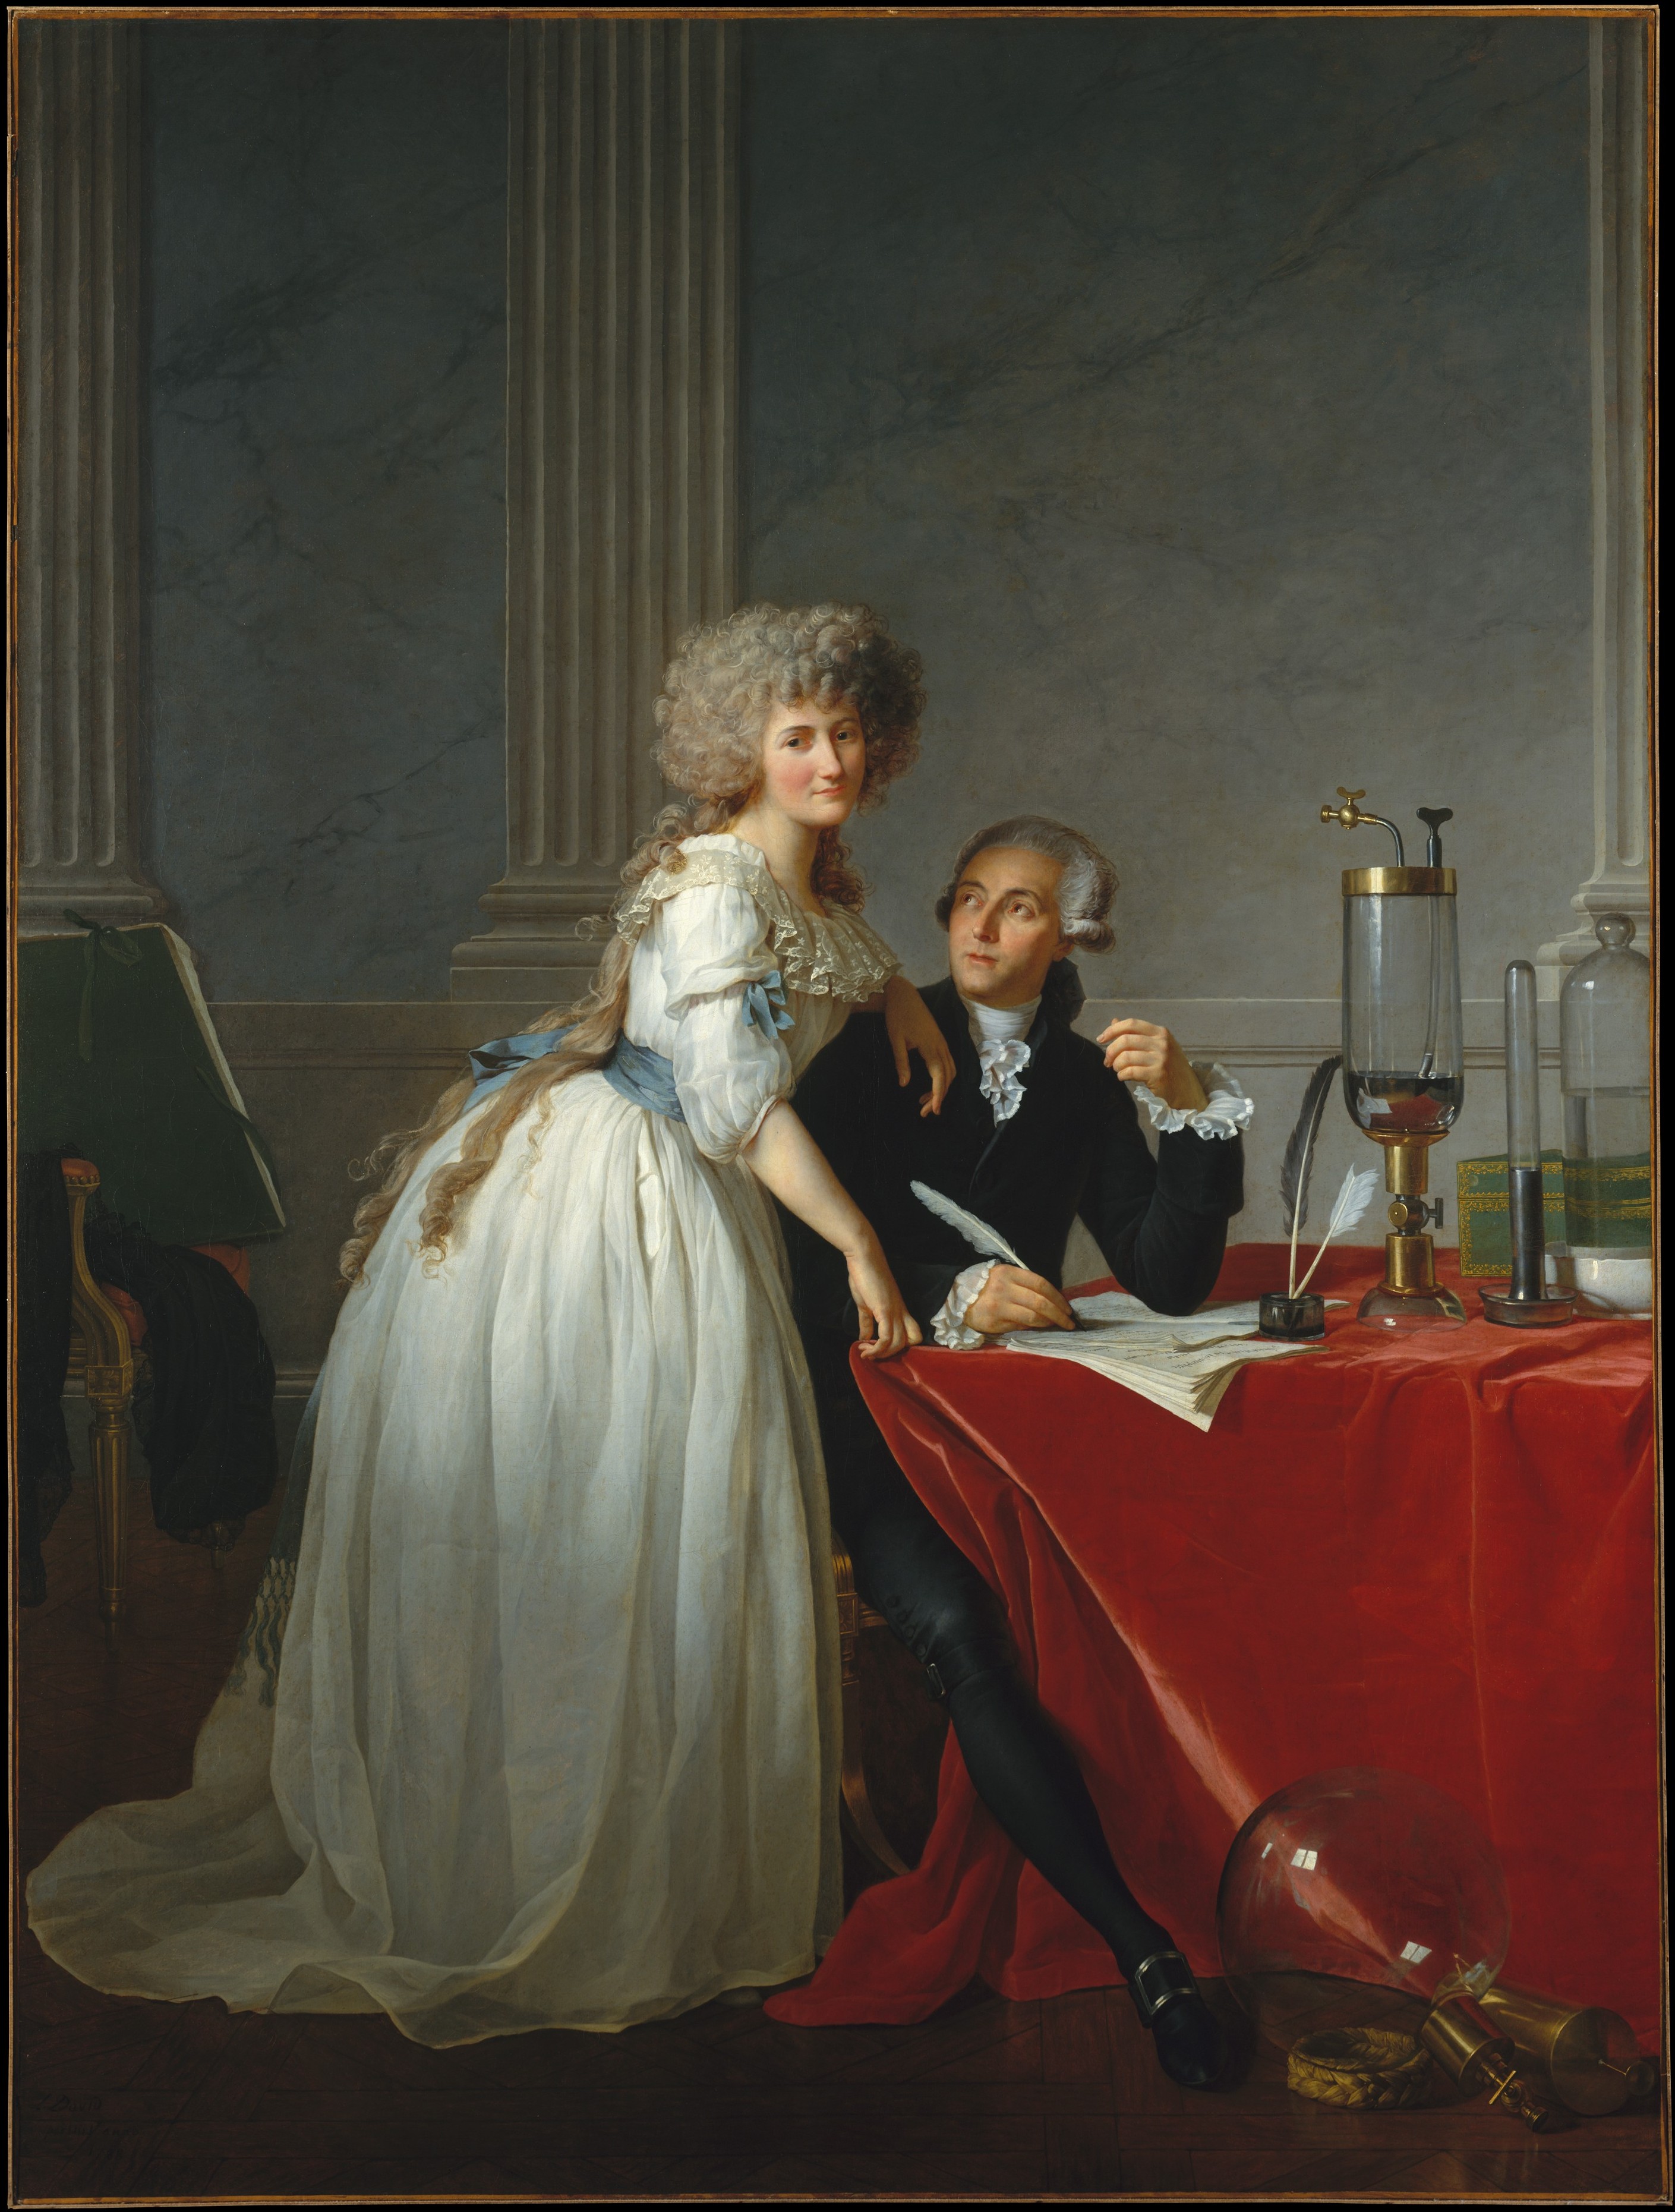 Antoine Laurent Lavoisier y su esposa by Jacques-Louis David - 1788 - 259.7 x 194.6 cm Museo Metropolitano de Arte